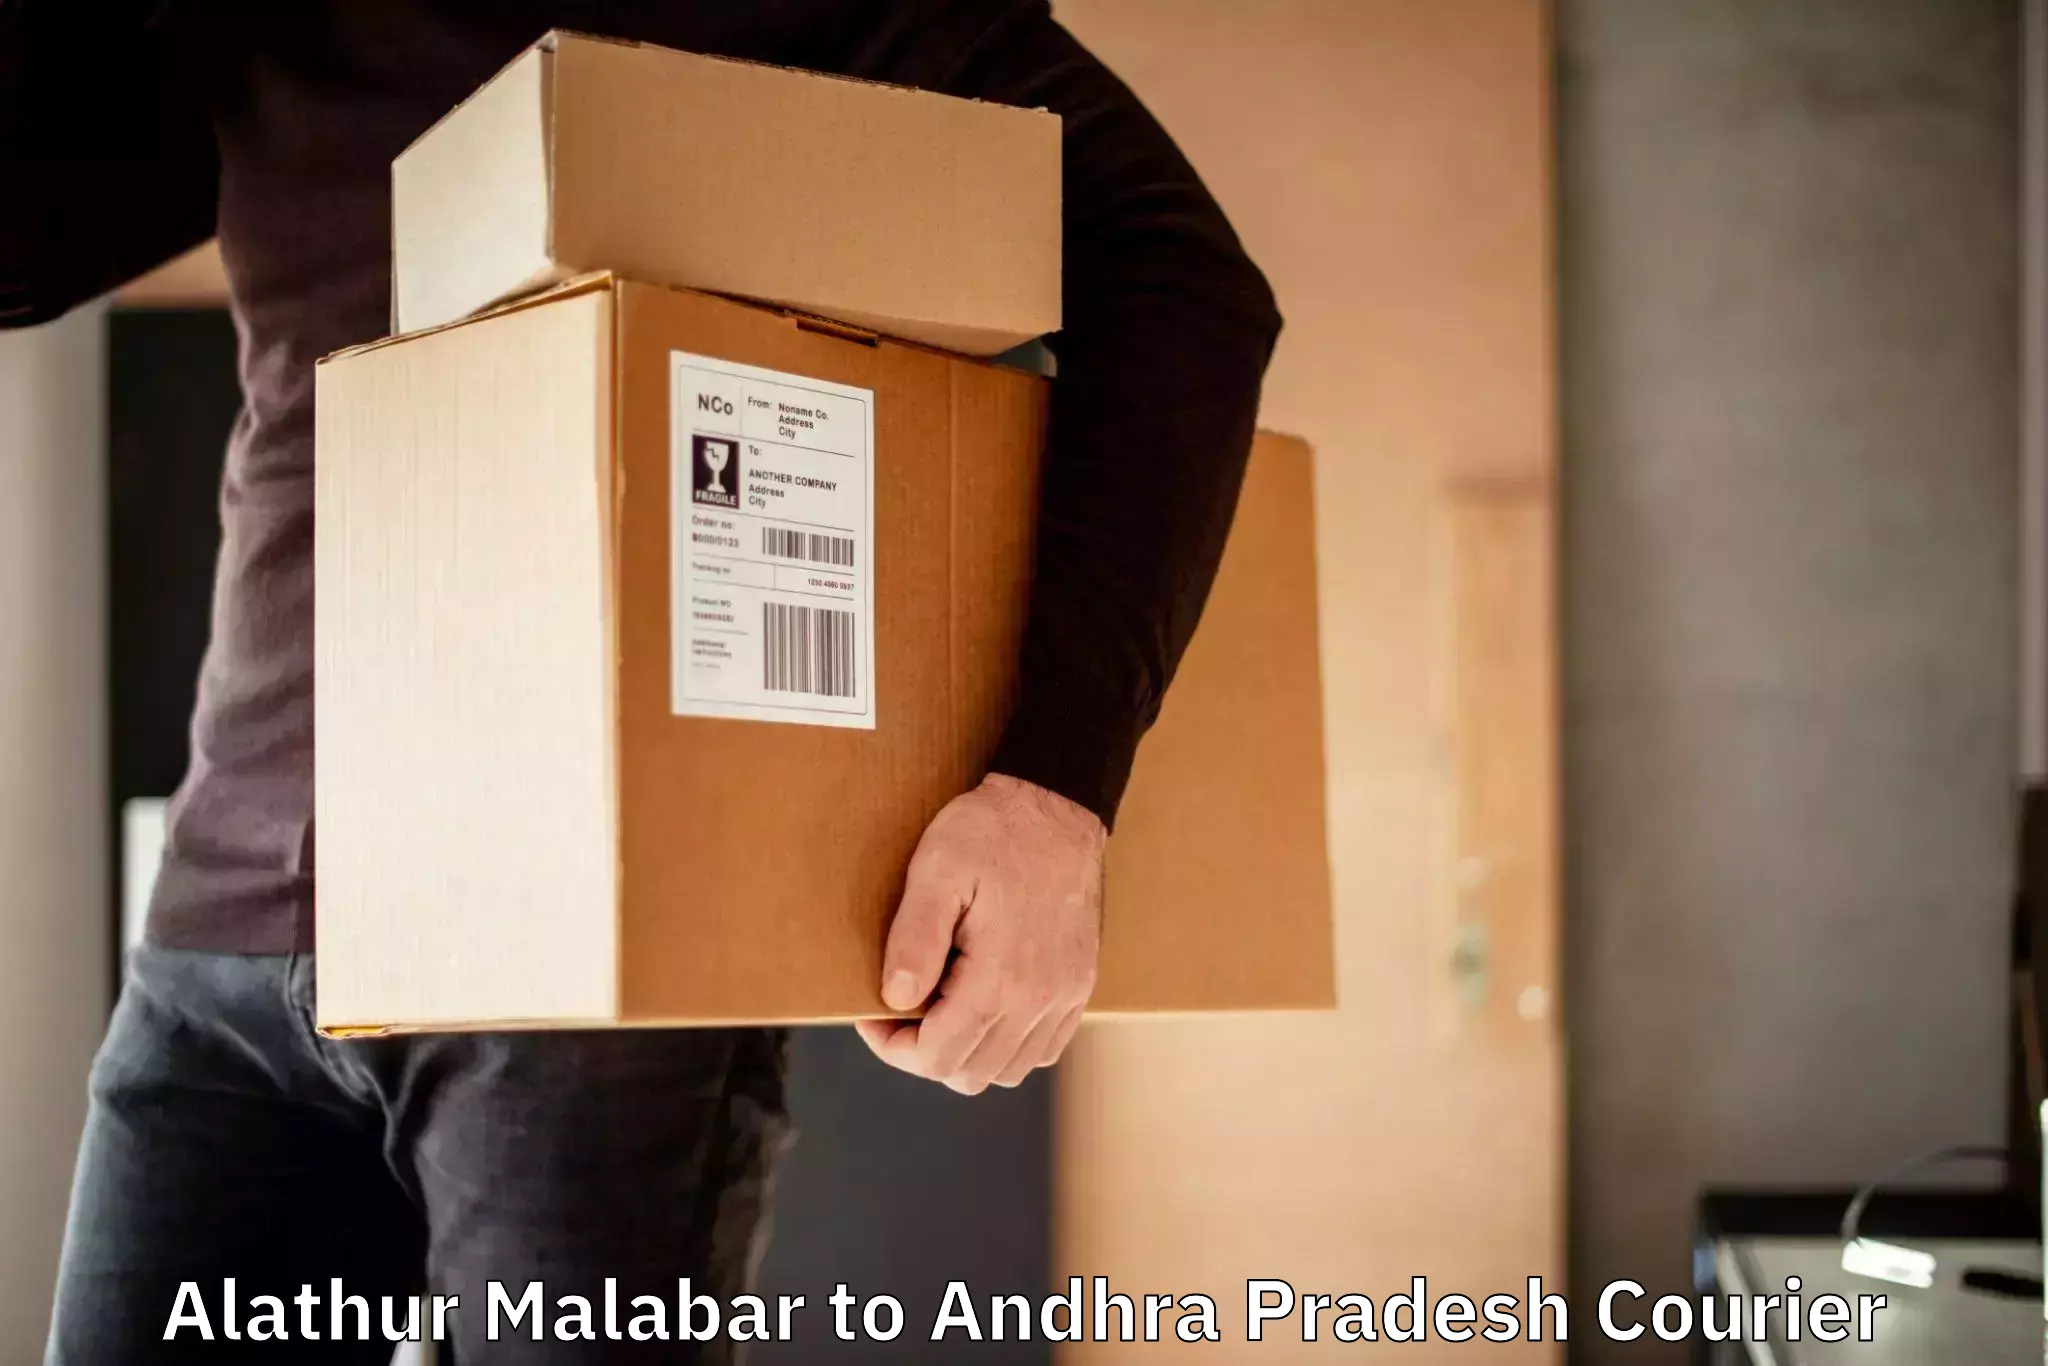 Bulk courier orders Alathur Malabar to Martur